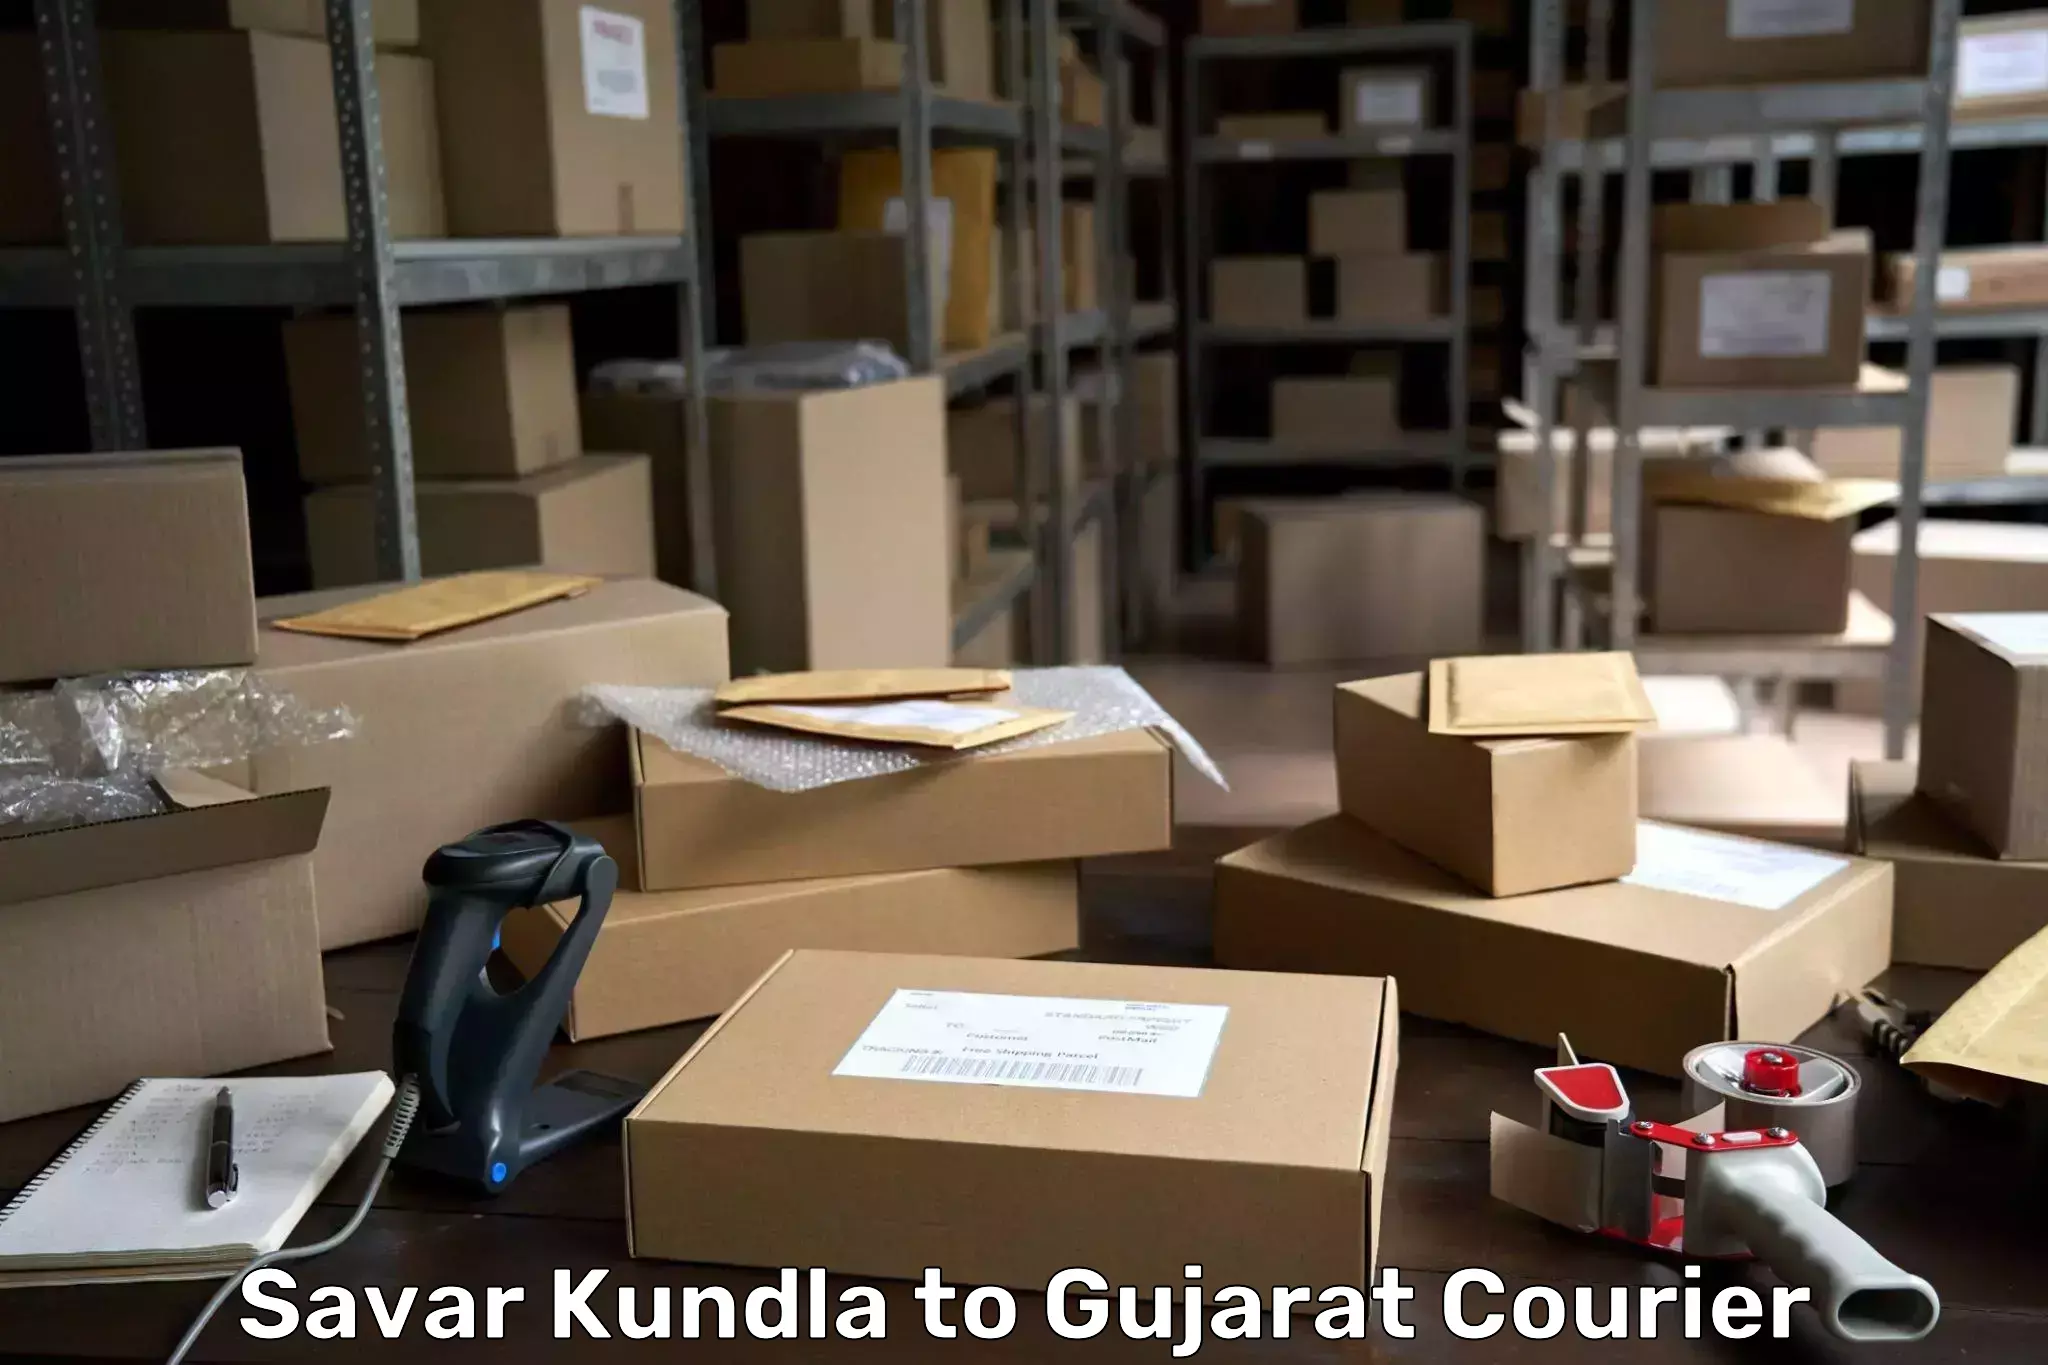 Courier service efficiency Savar Kundla to IIIT Surat